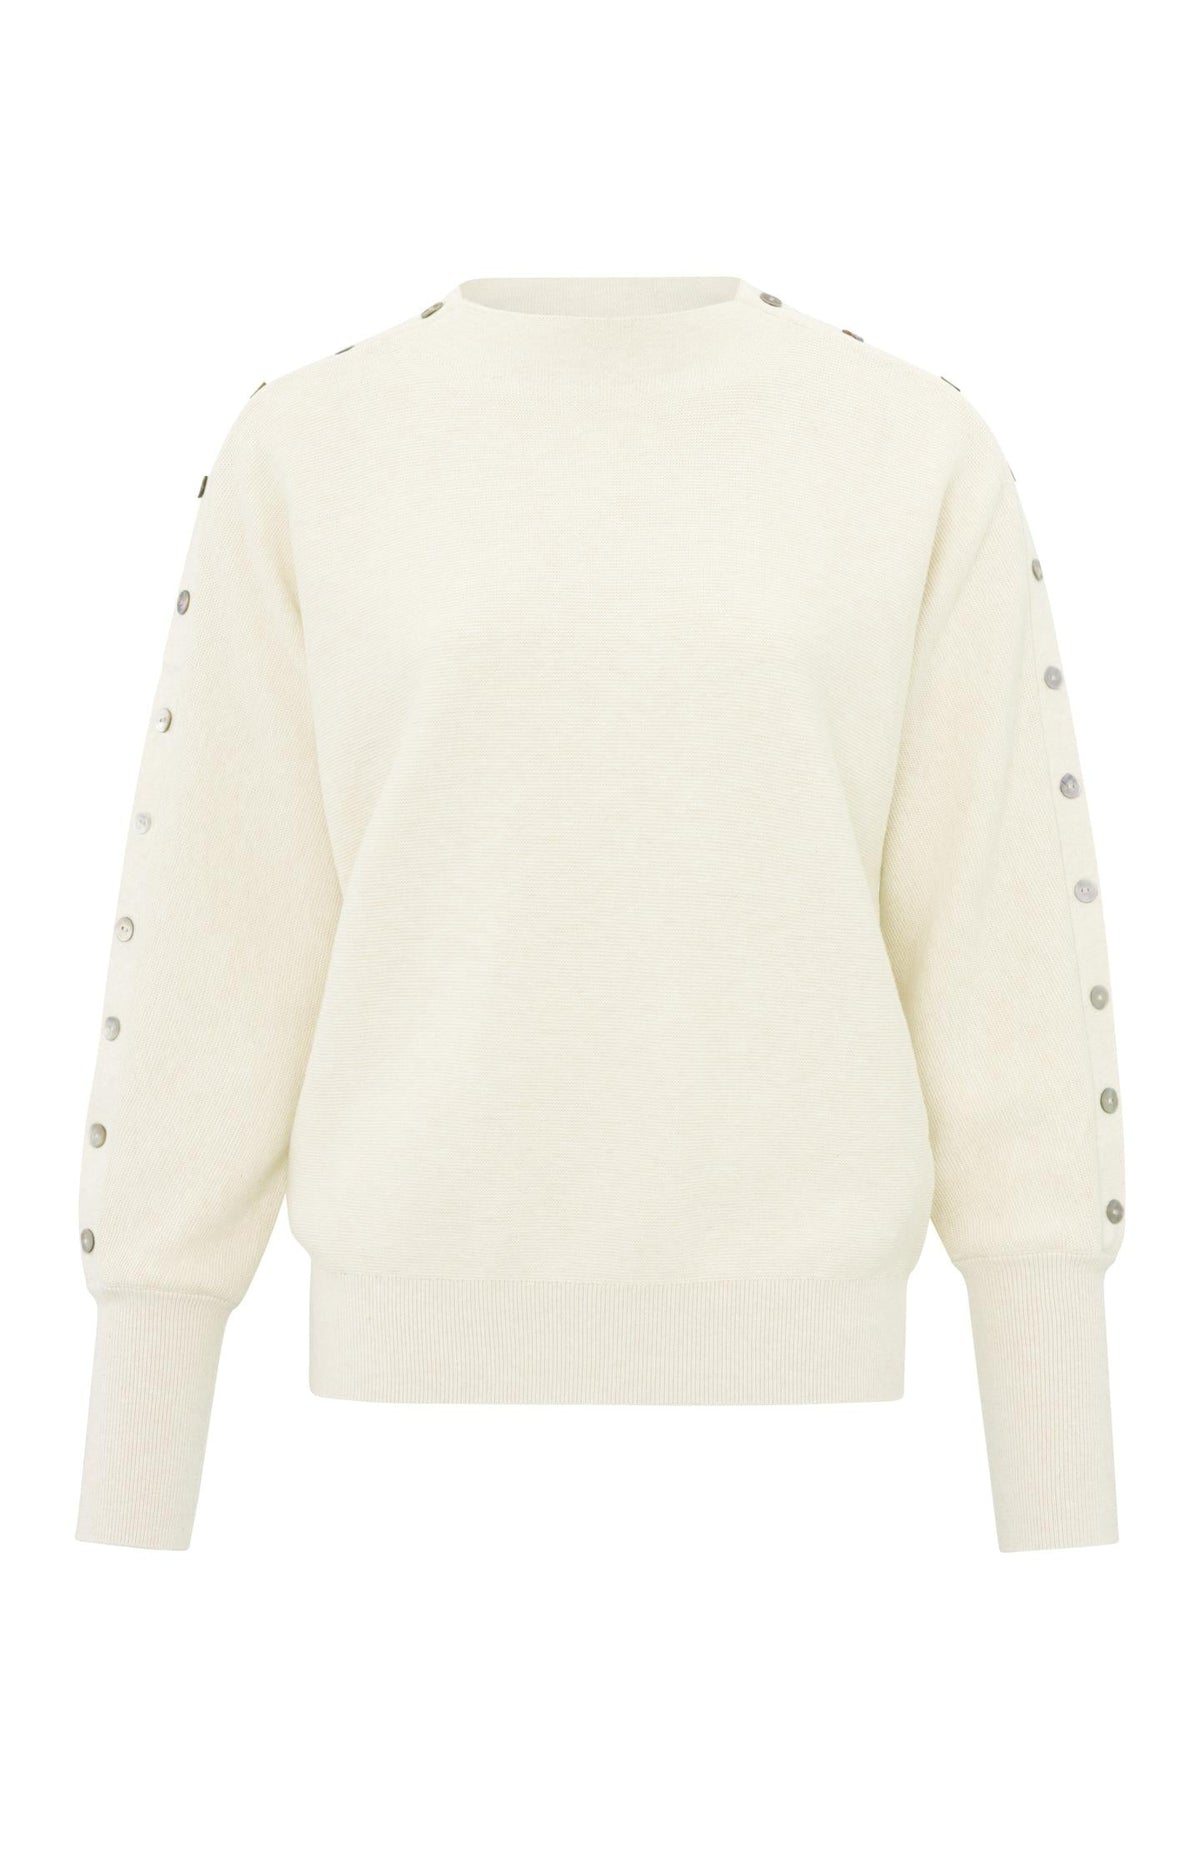 YaYa | Boatneck Sweater | Long Sleeves | Button Details | Ivory White